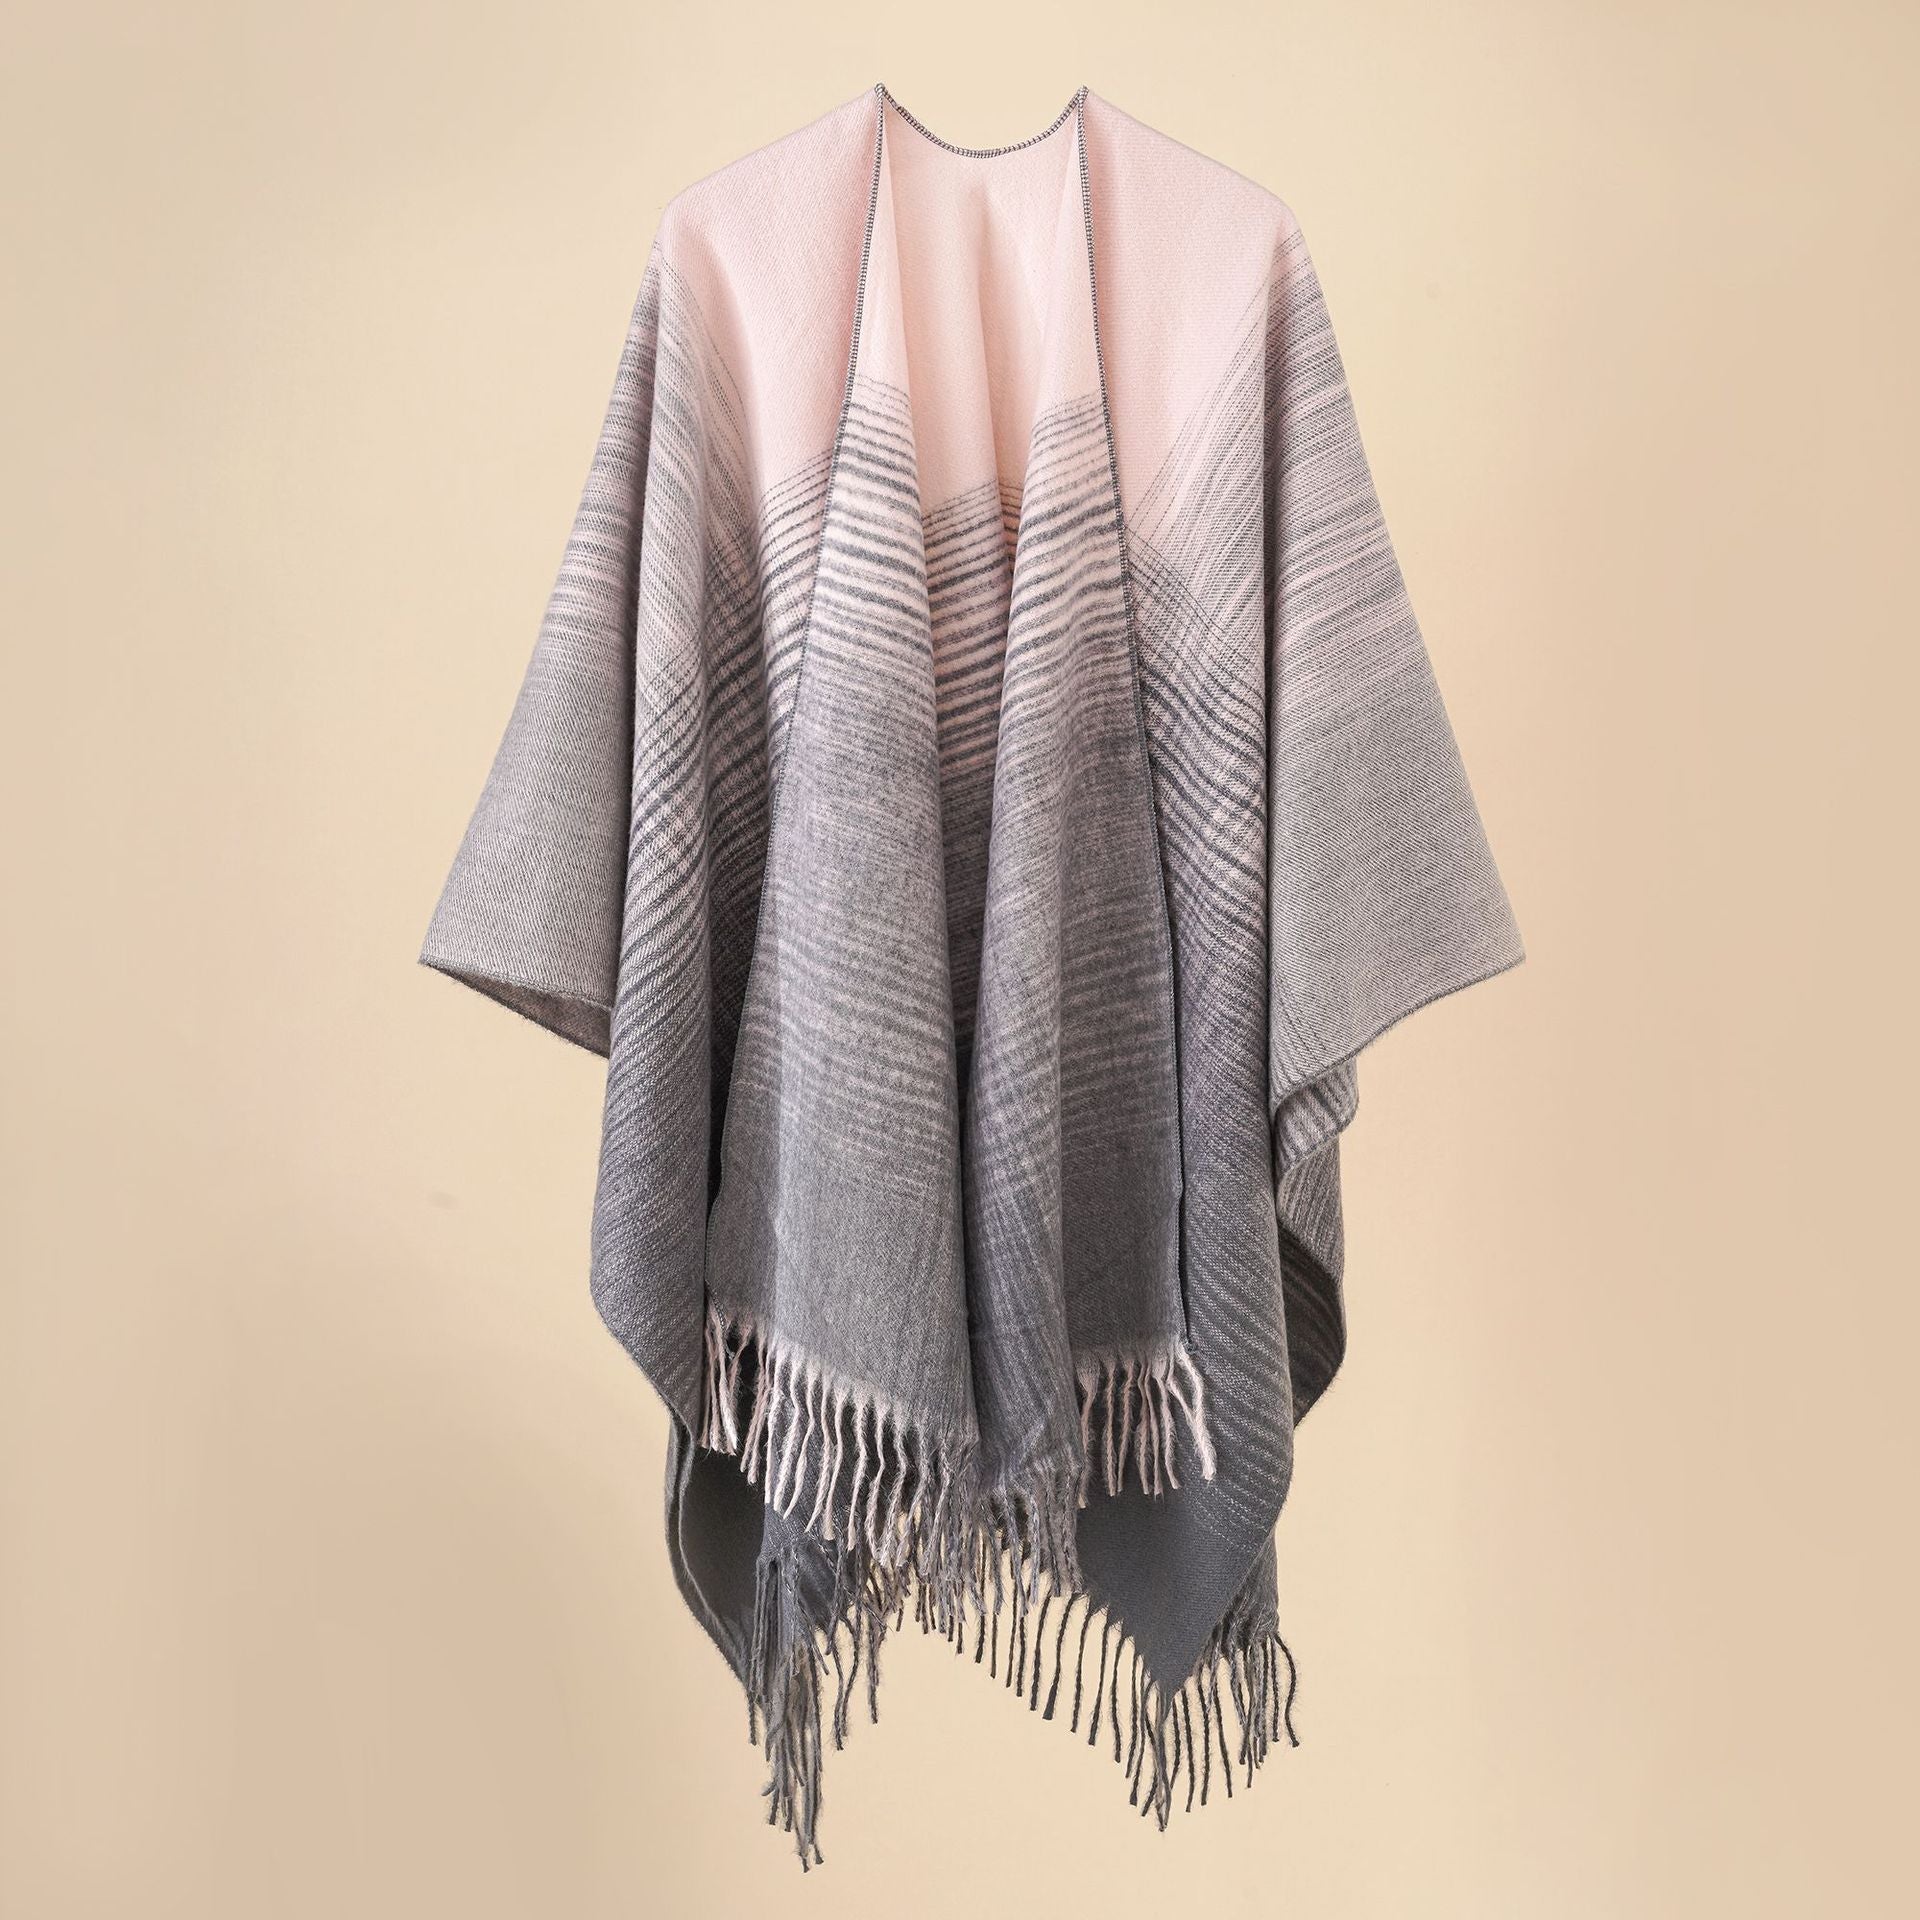 Fashion Tassels Shawls for Women-shawls-Pink-155CM-Free Shipping at meselling99